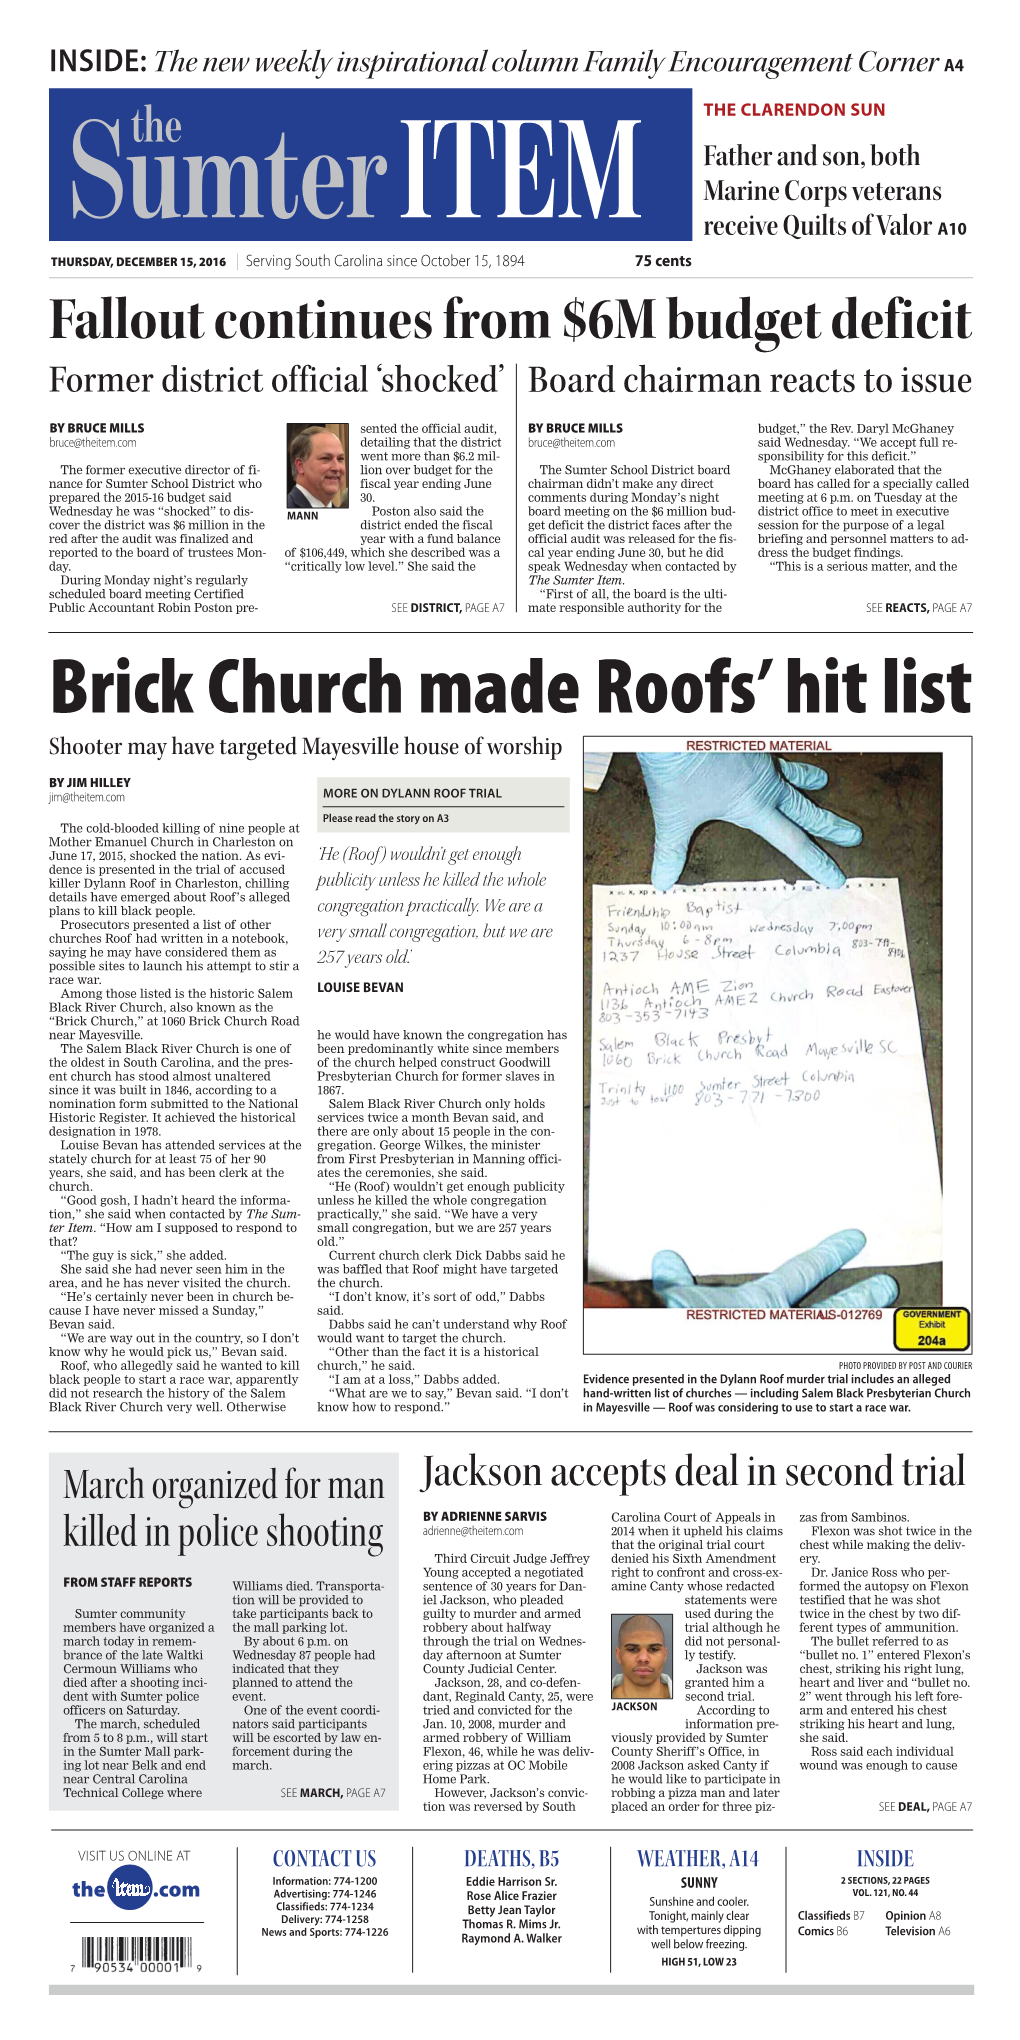 Brick Church Made Roofs' Hit List